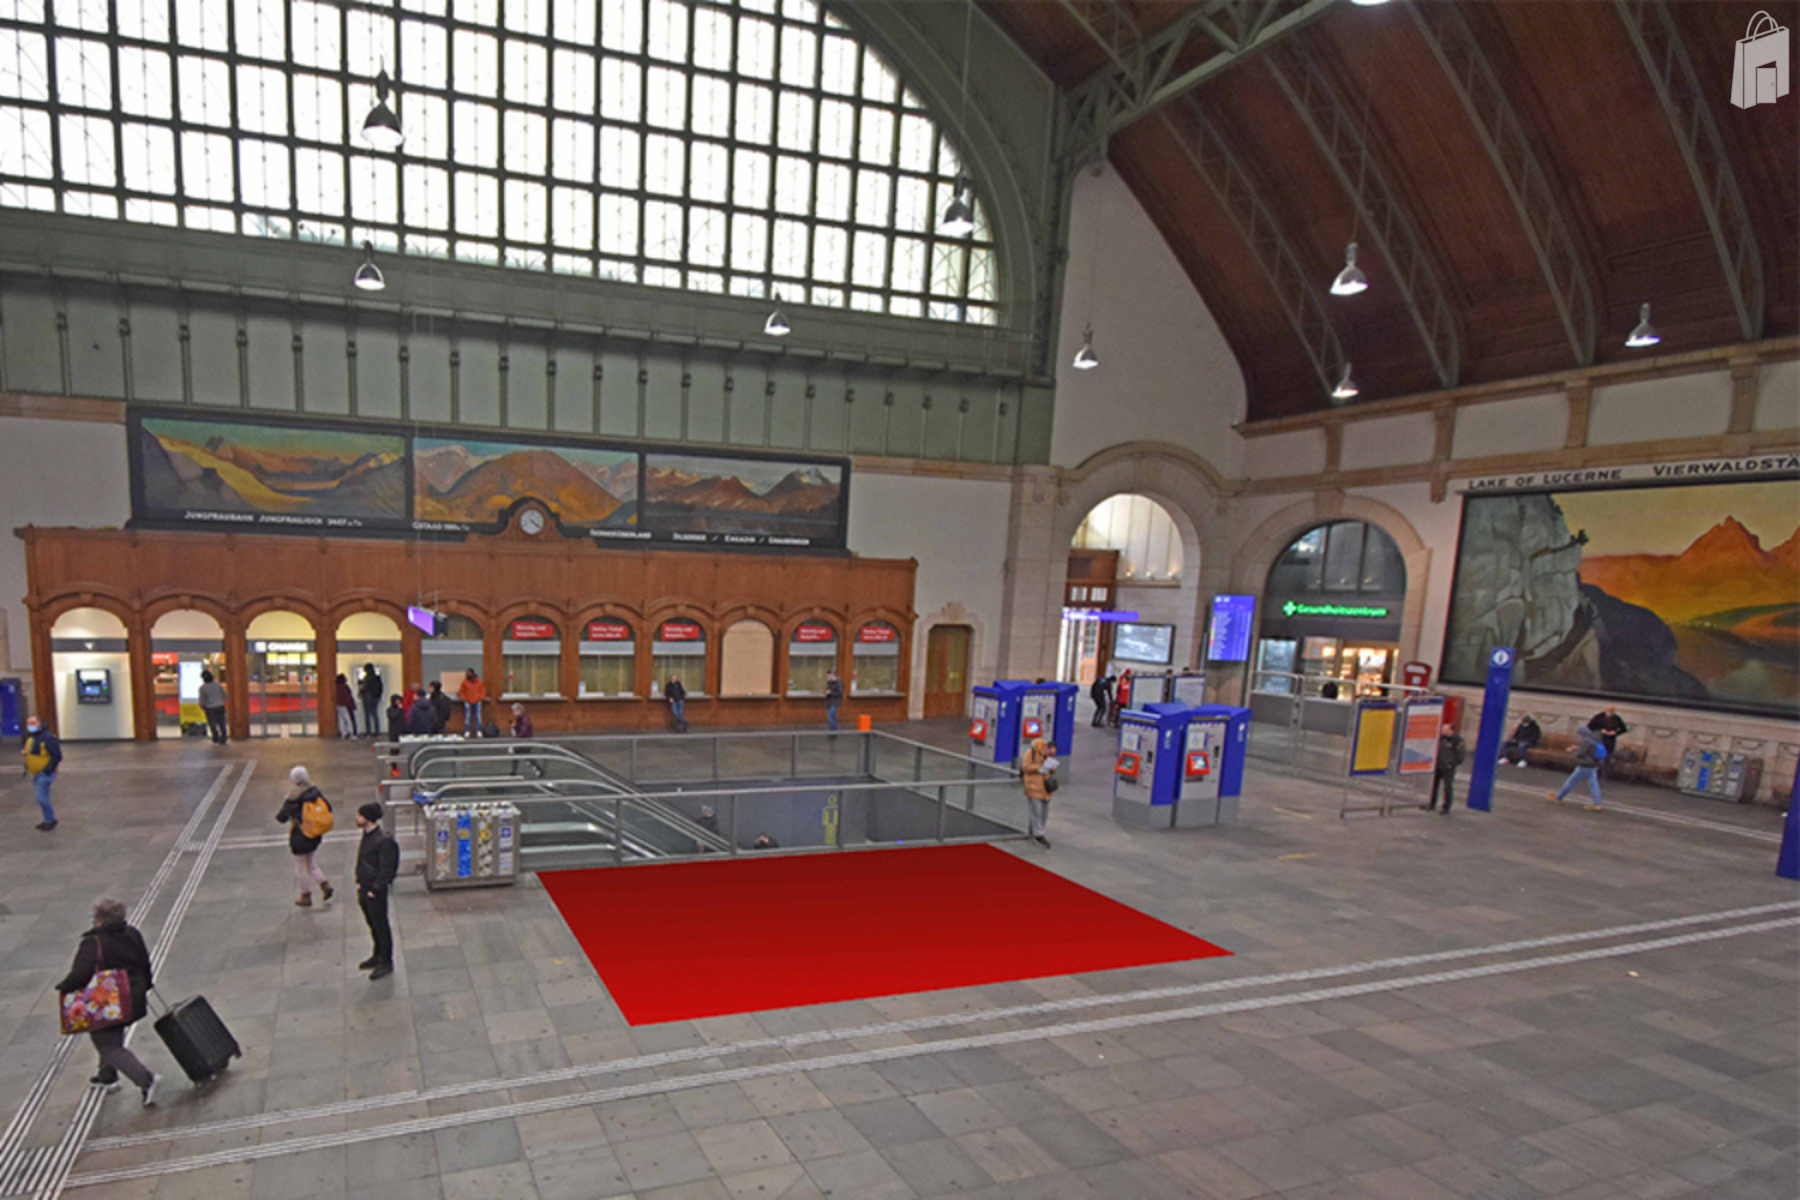 Promotionsfläche P1, Bahnhof Basel SBB - Länge x Breite : 7 m x 5 m